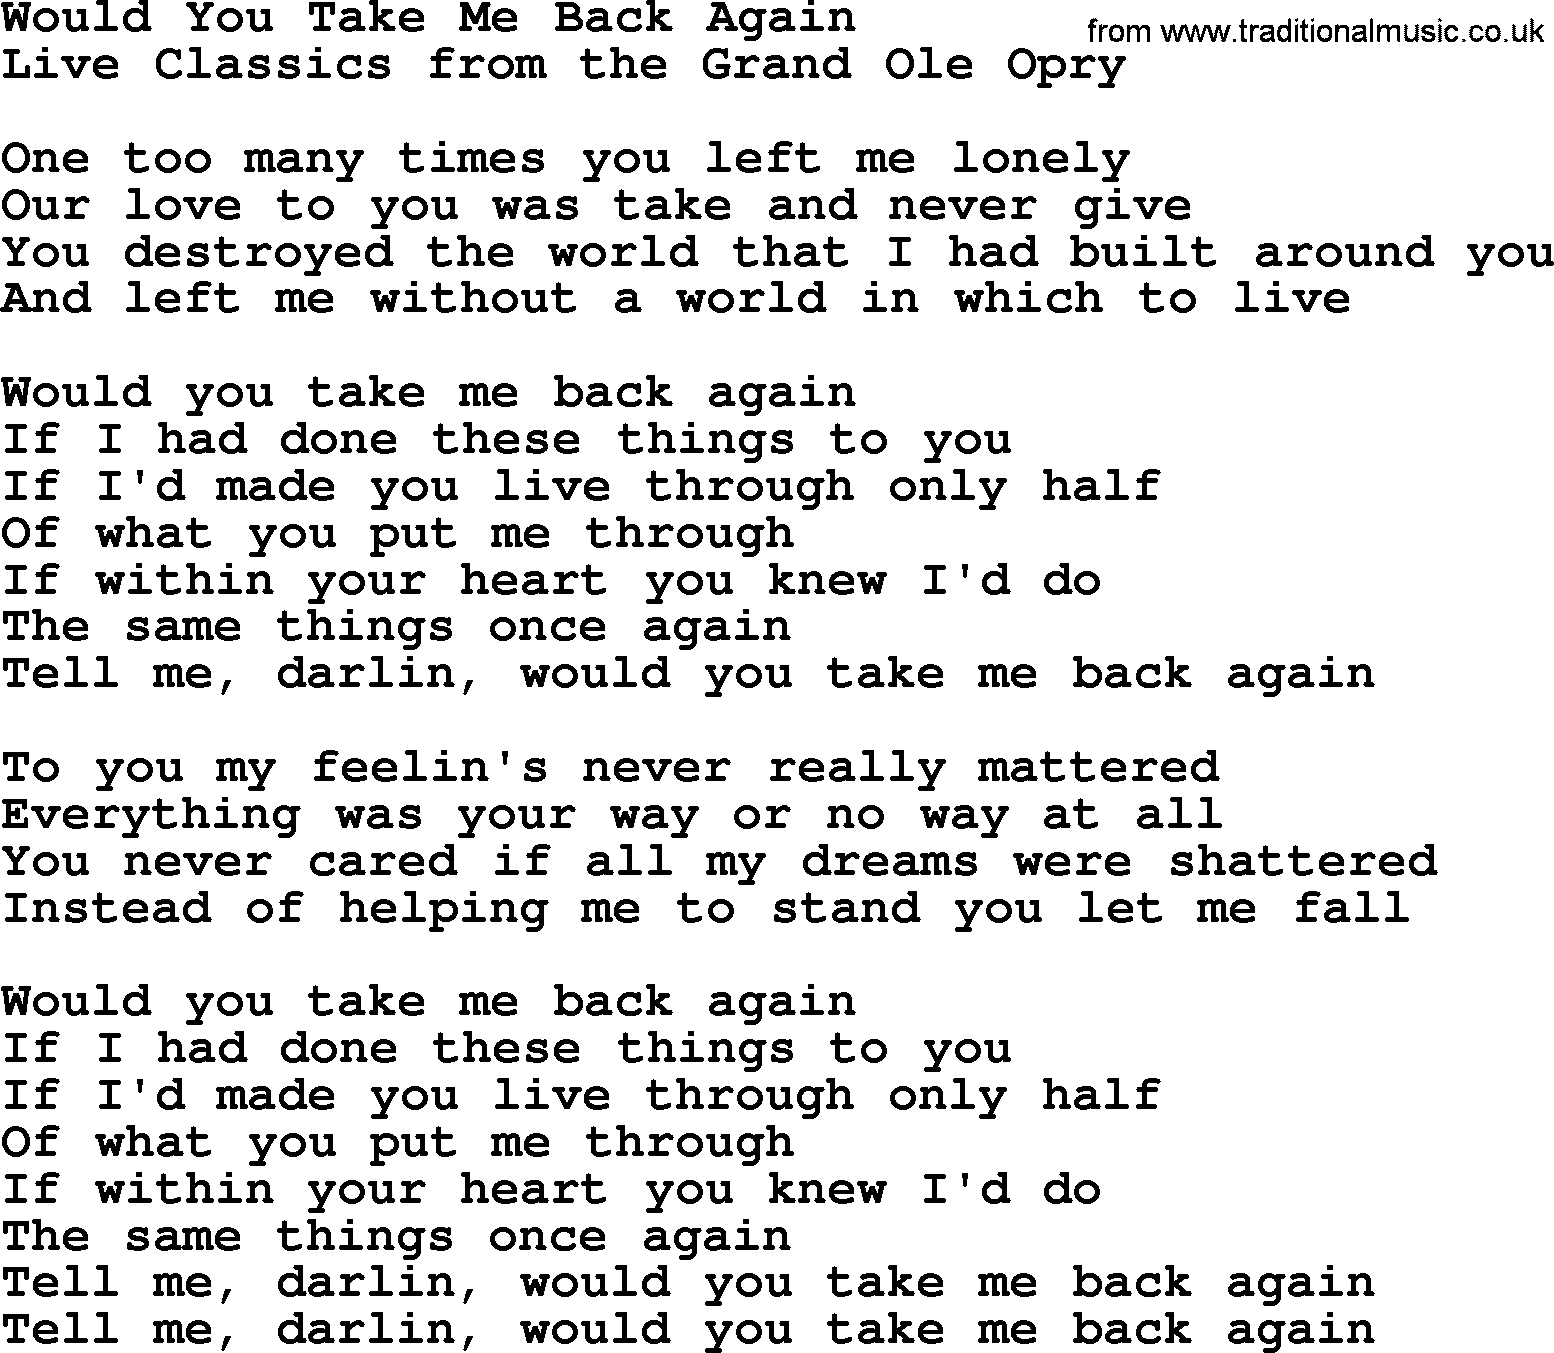 Marty Robbins song: Would You Take Me Back Again, lyrics